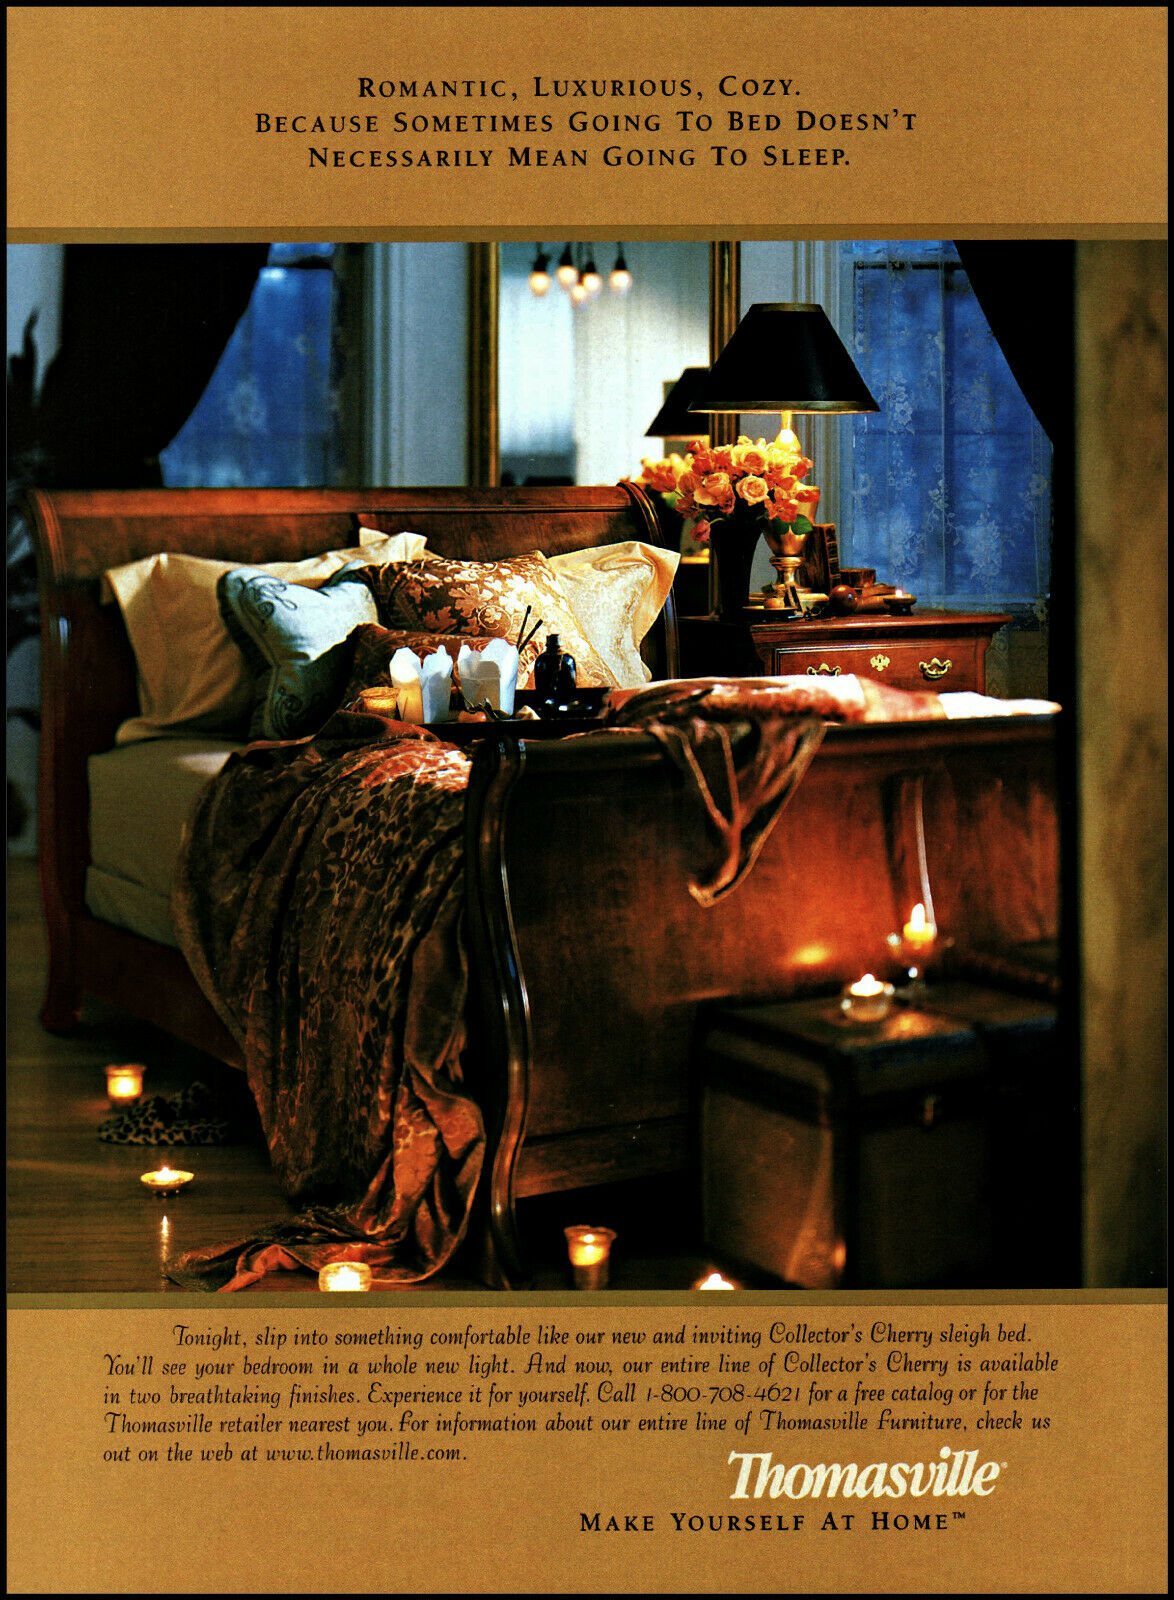 1998 Thomasville Bedroom Furniture Collector's Cherry Retro Photo Print Ad Ads2